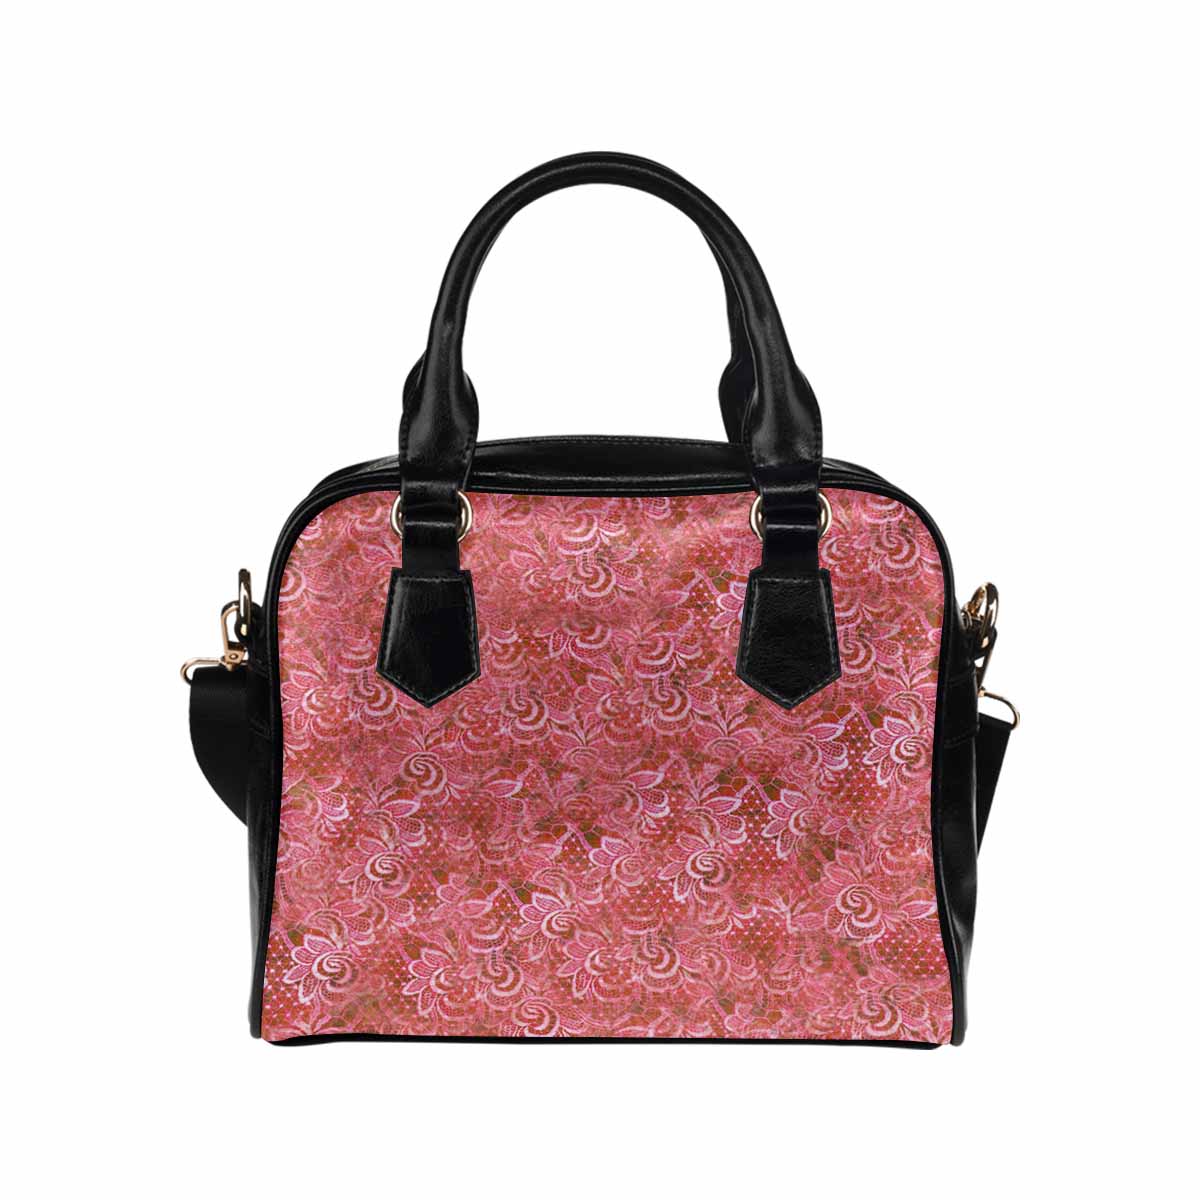 Victorian lace print, cute handbag, Mod 19163453, design 33